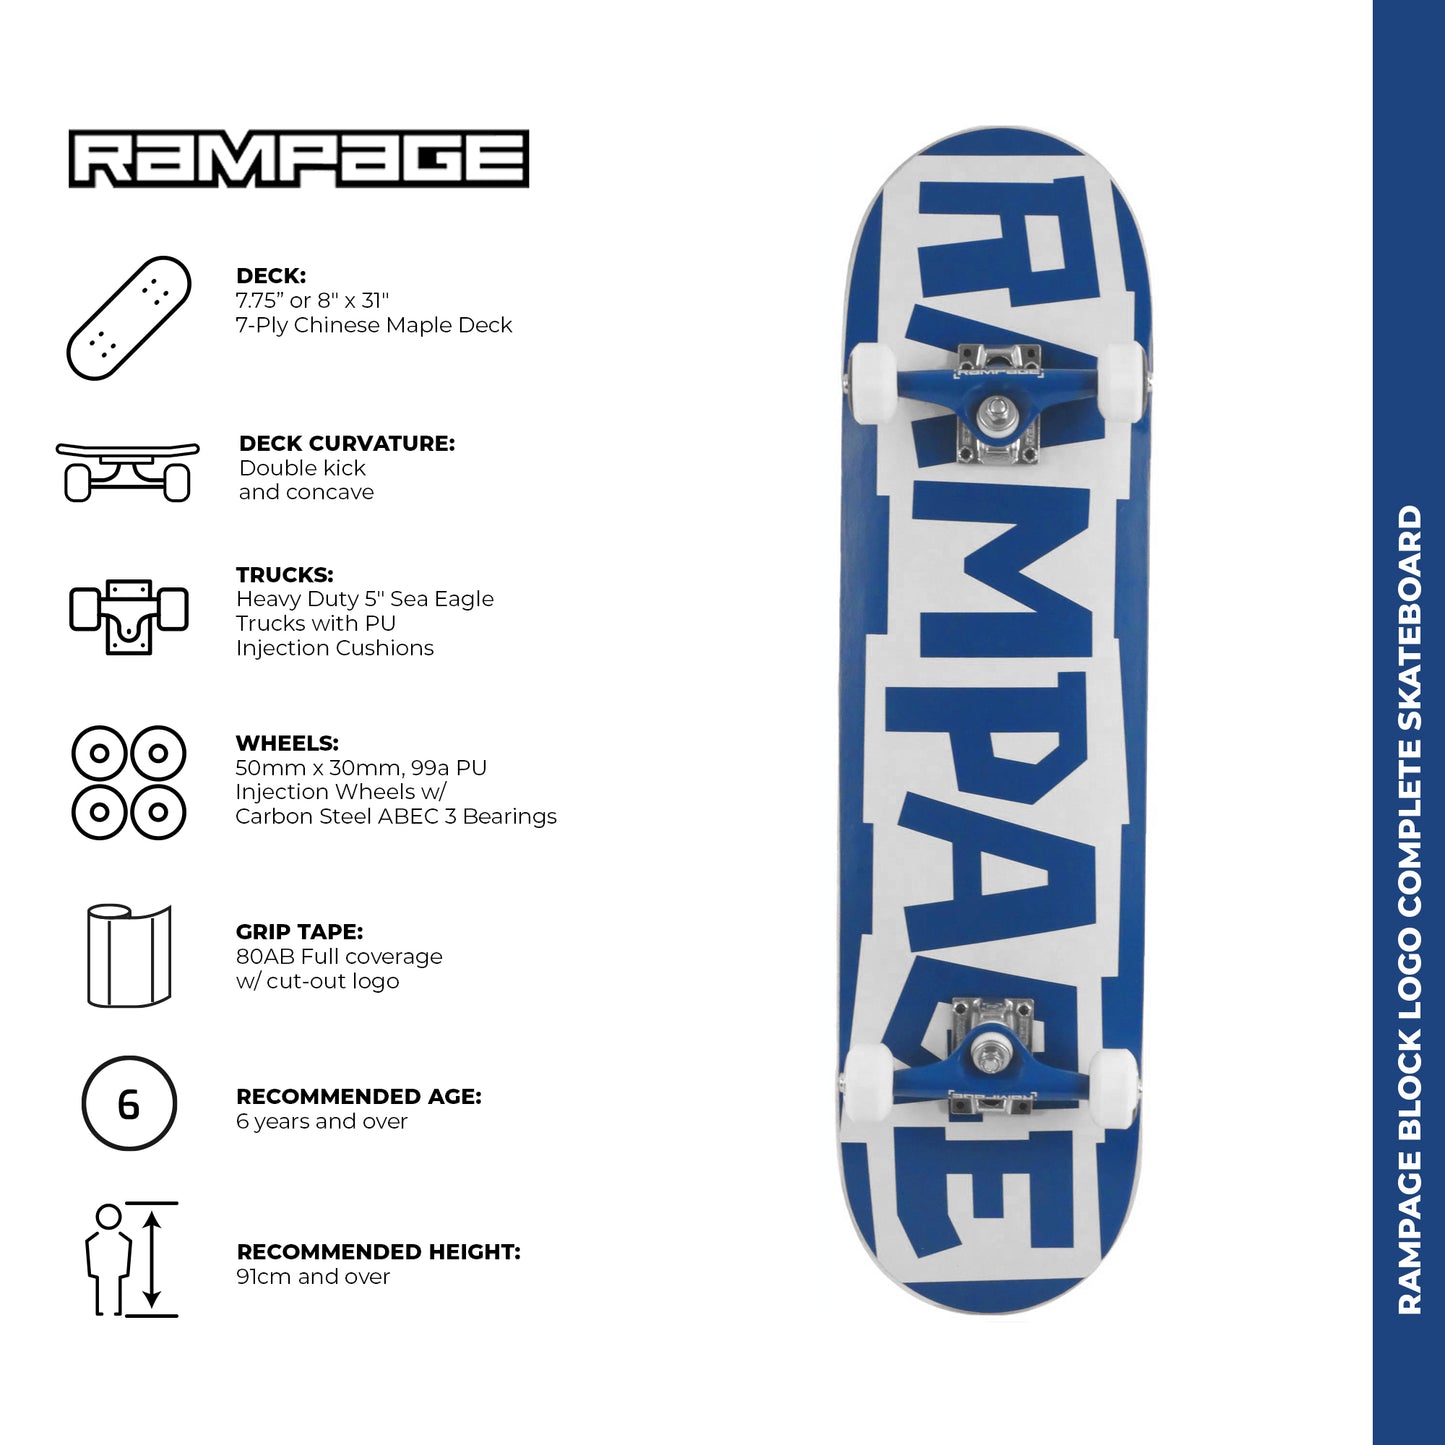 Rampage Block Logo Complete Skateboard - Blue/White 8''